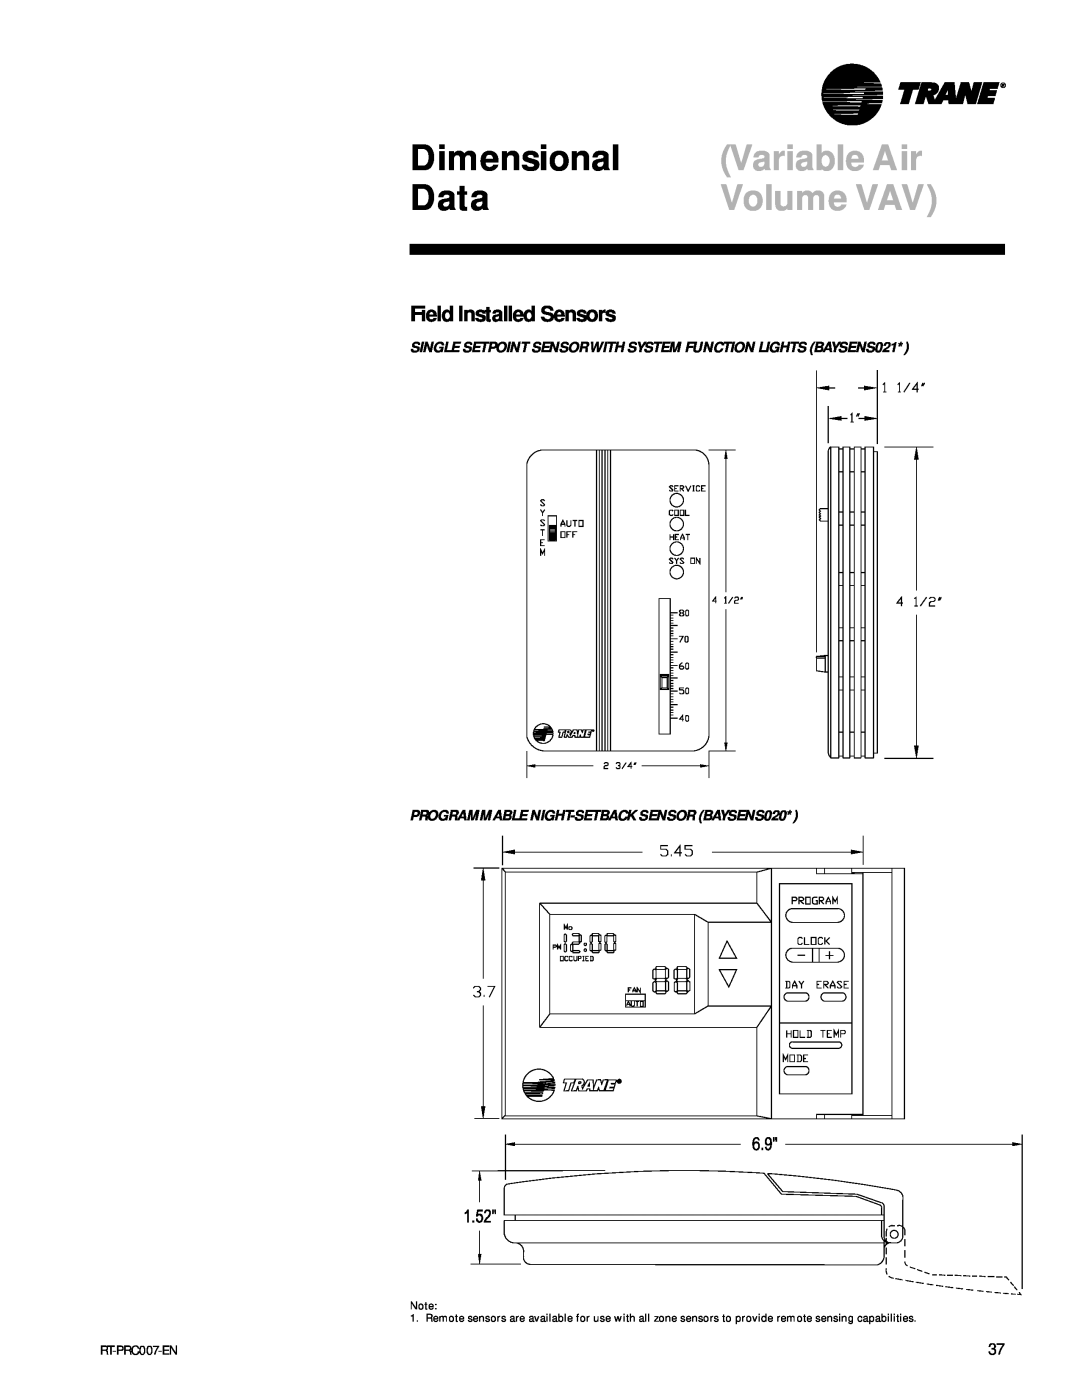 Trane RT-PRC007-EN manual Dimensional, Variable Air, Data, Volume VAV, Field Installed Sensors 